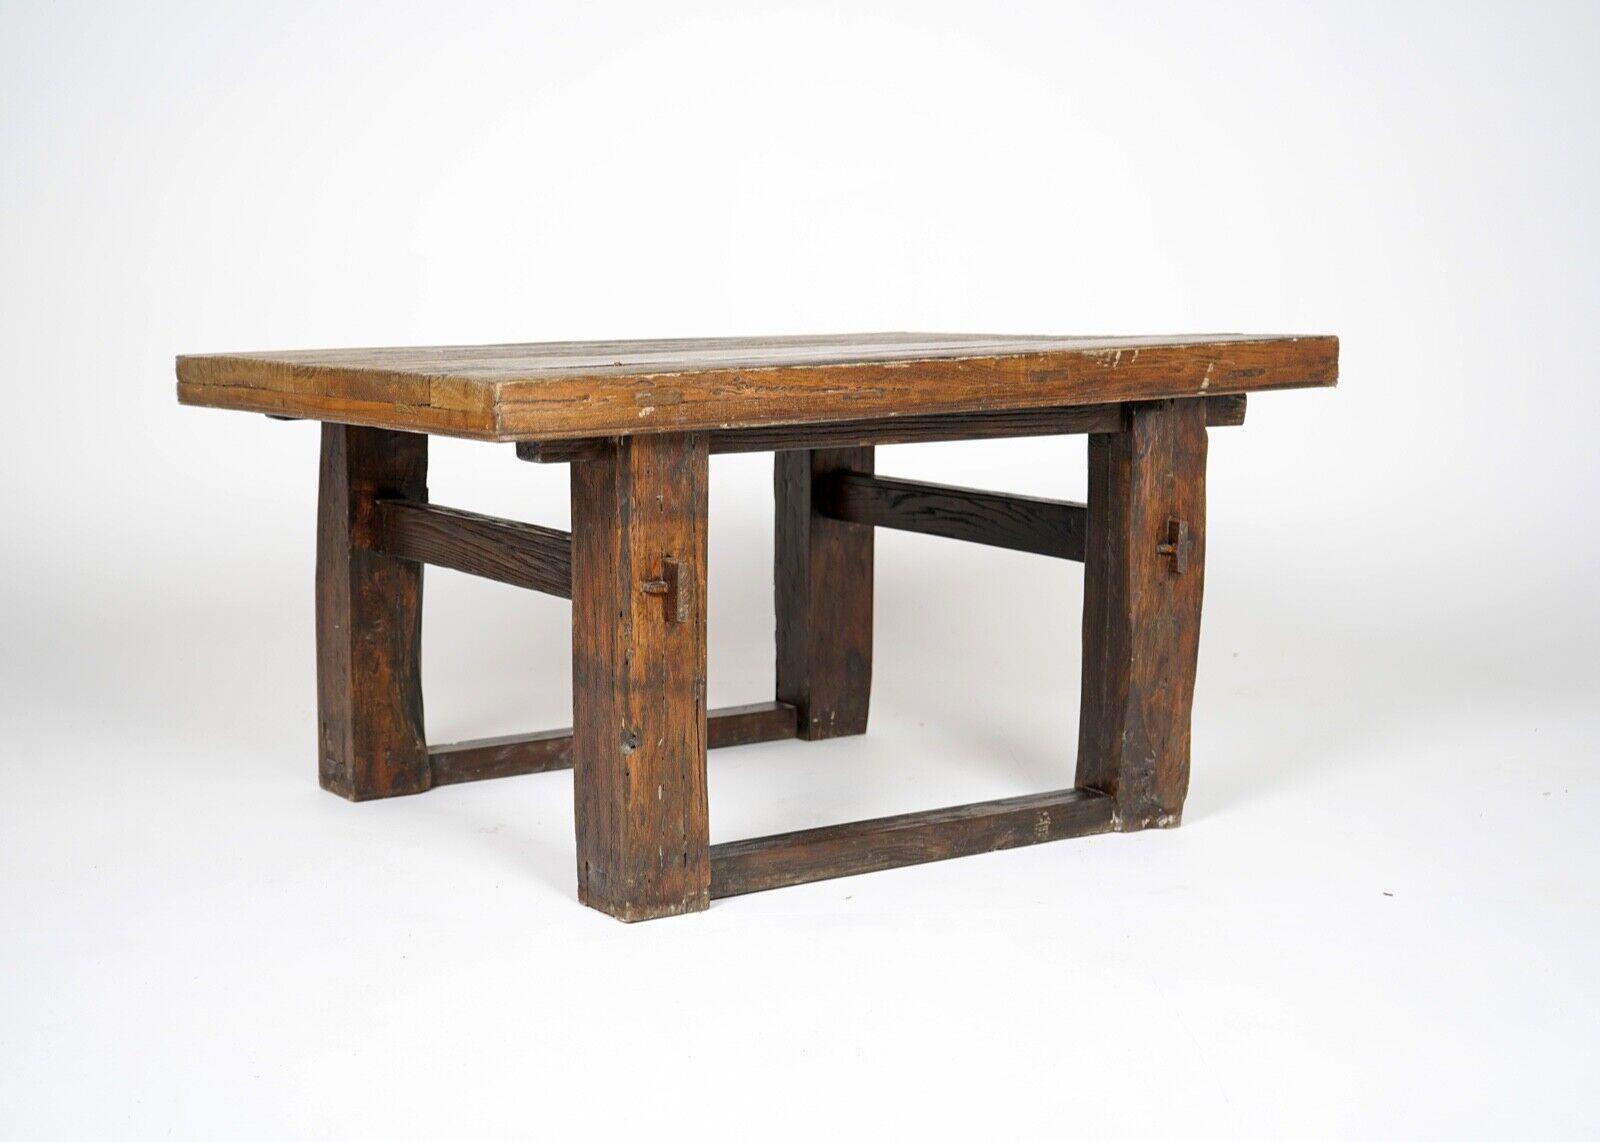 20th Century Antique Wooden Rustic Primitive Rectangular Coffee Table